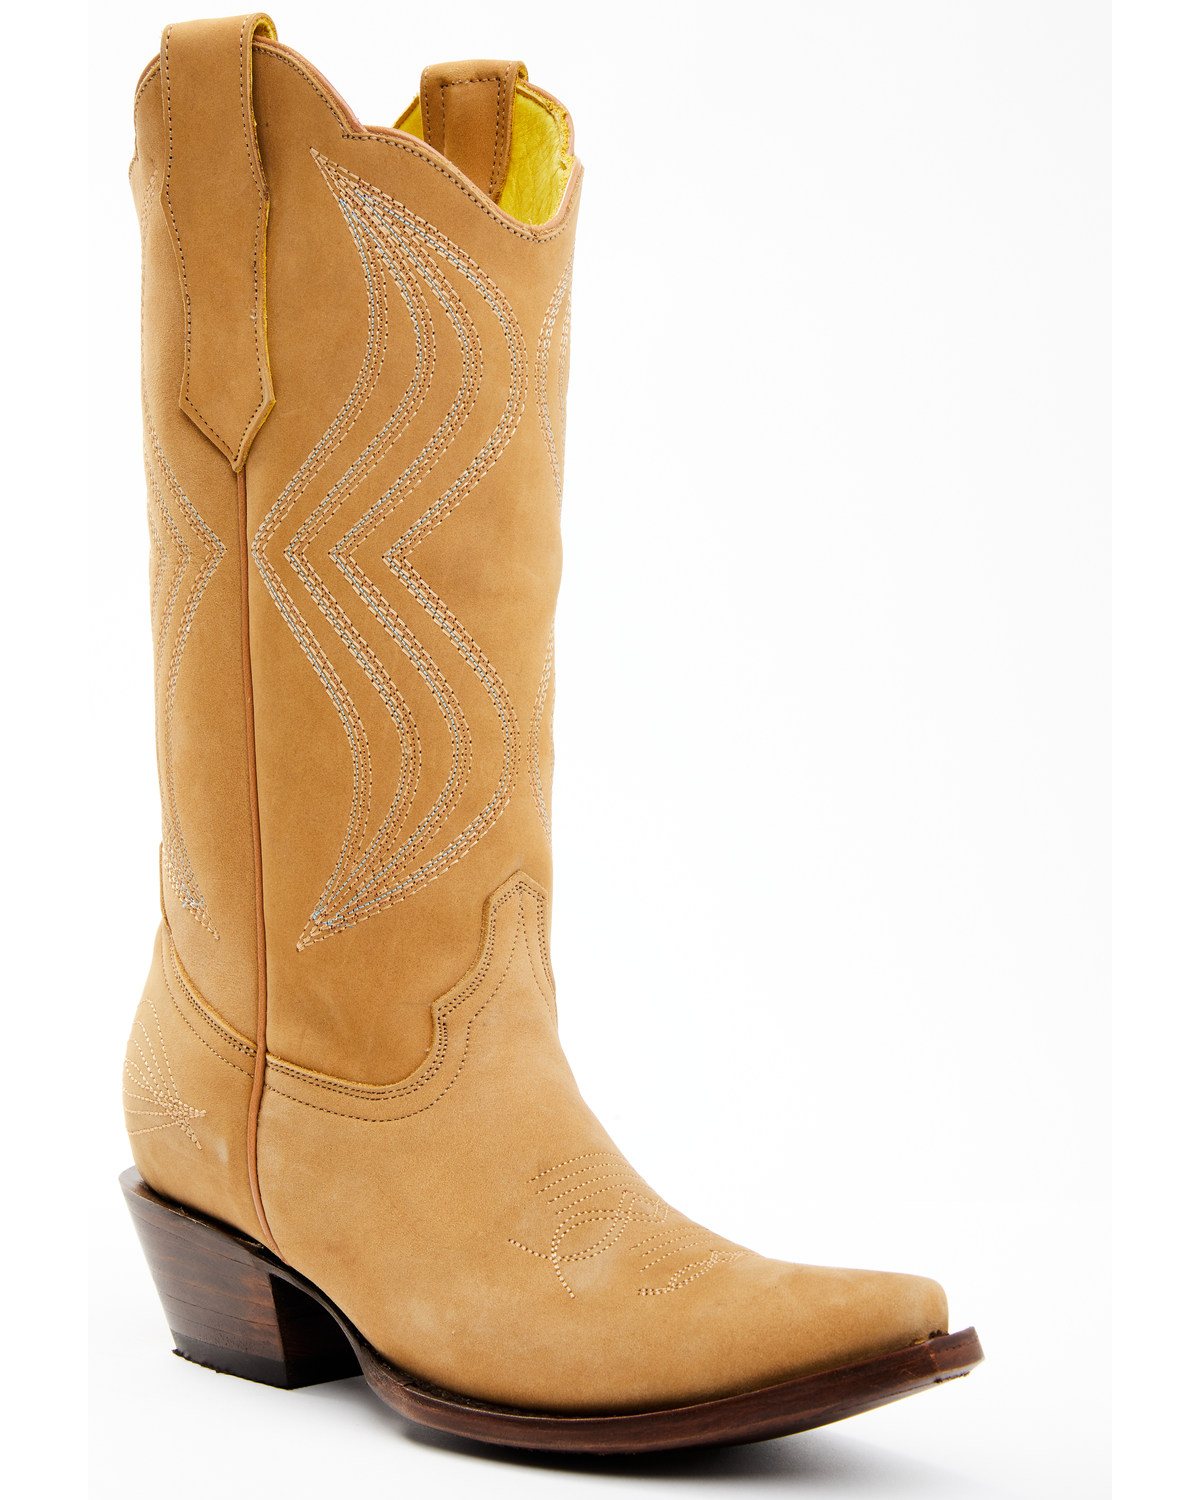 Planet Cowboy Women's Classic Sandy Western Boots - Snip Toe